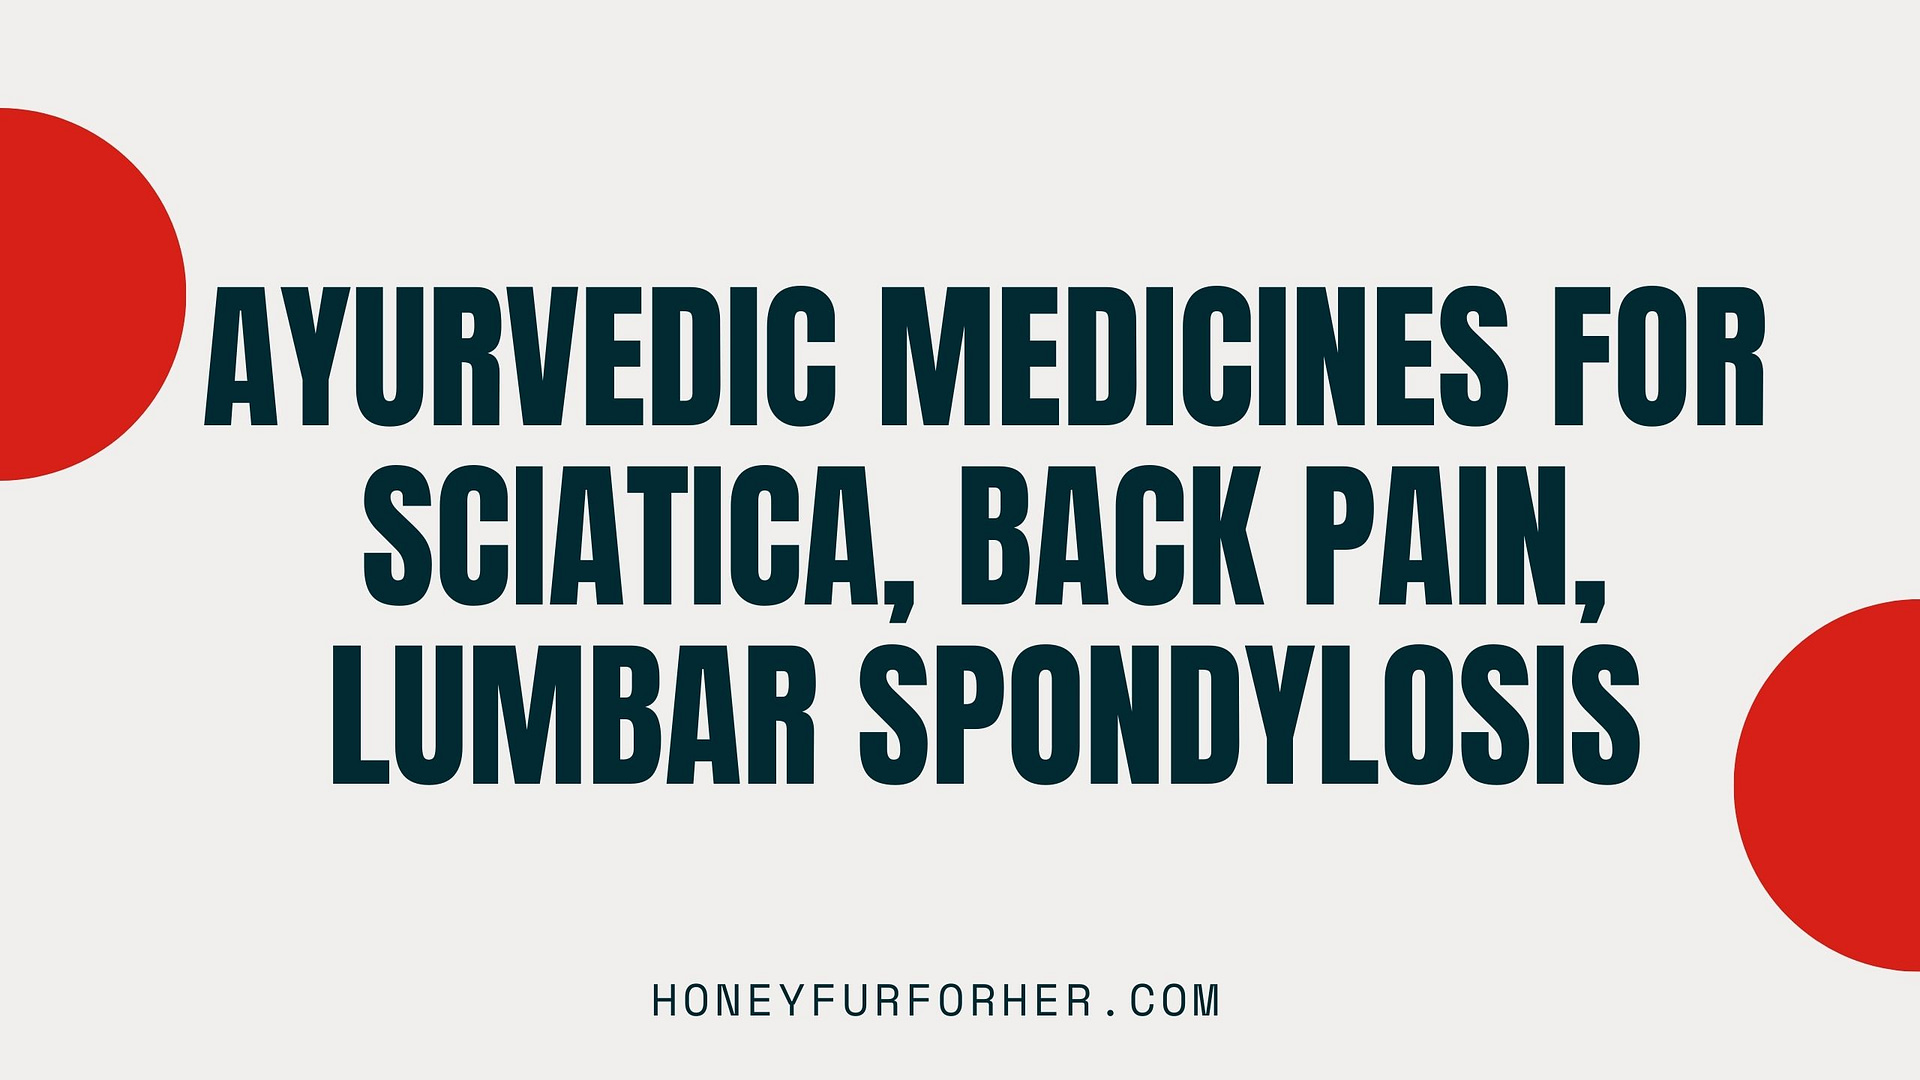 Ayurvedic Medicines For Sciatica Back Pain Feature Image